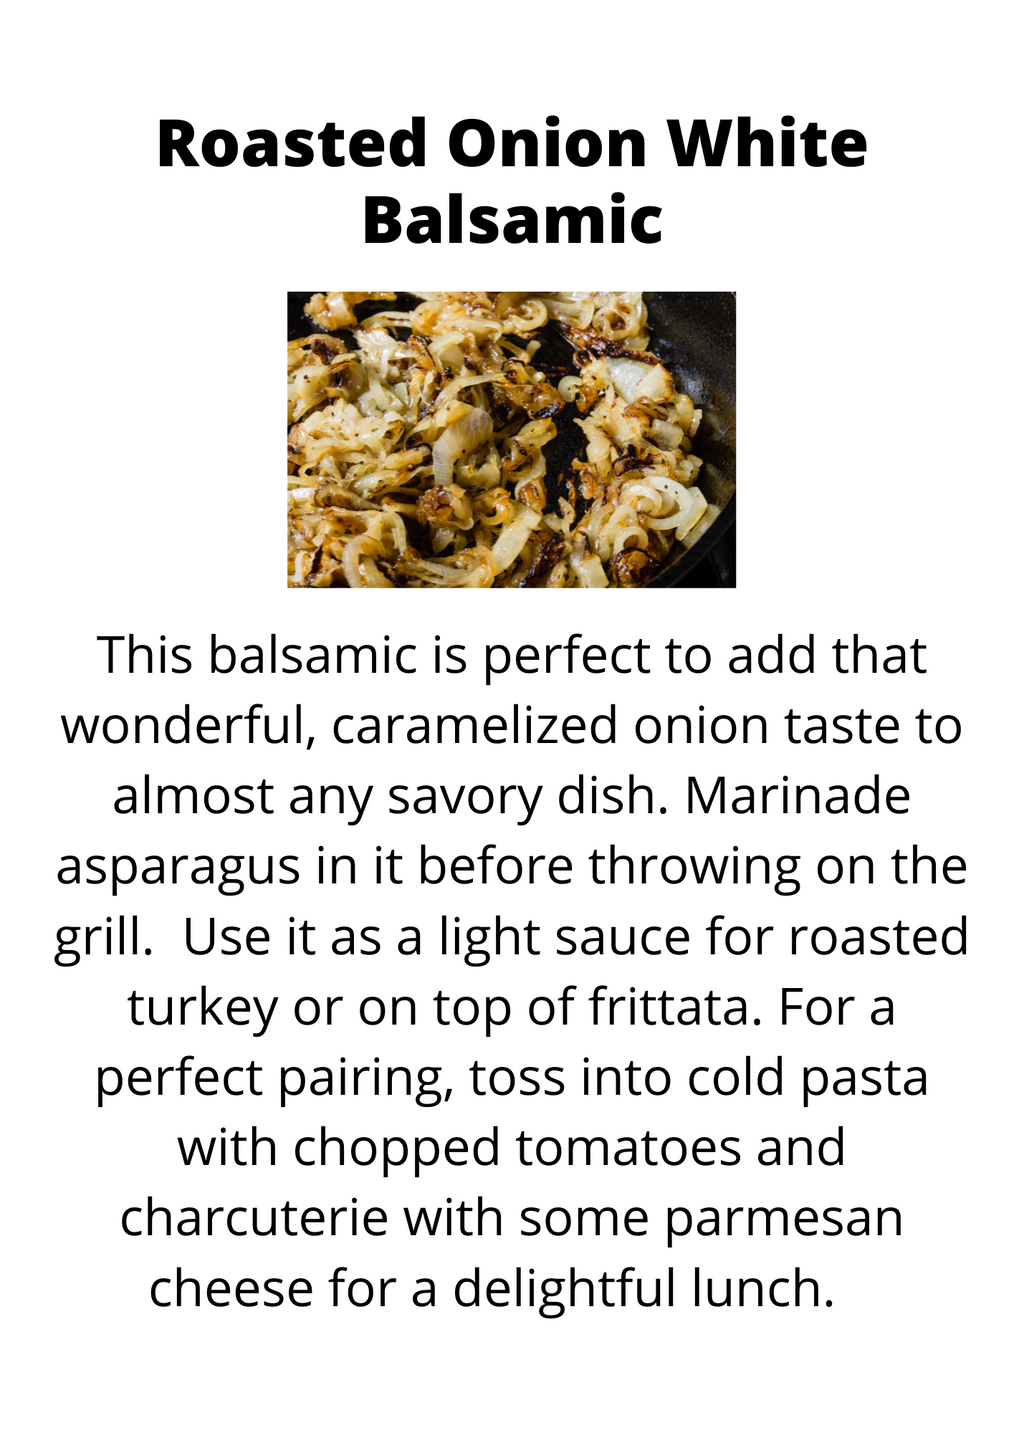 Roasted Onion Balsamic